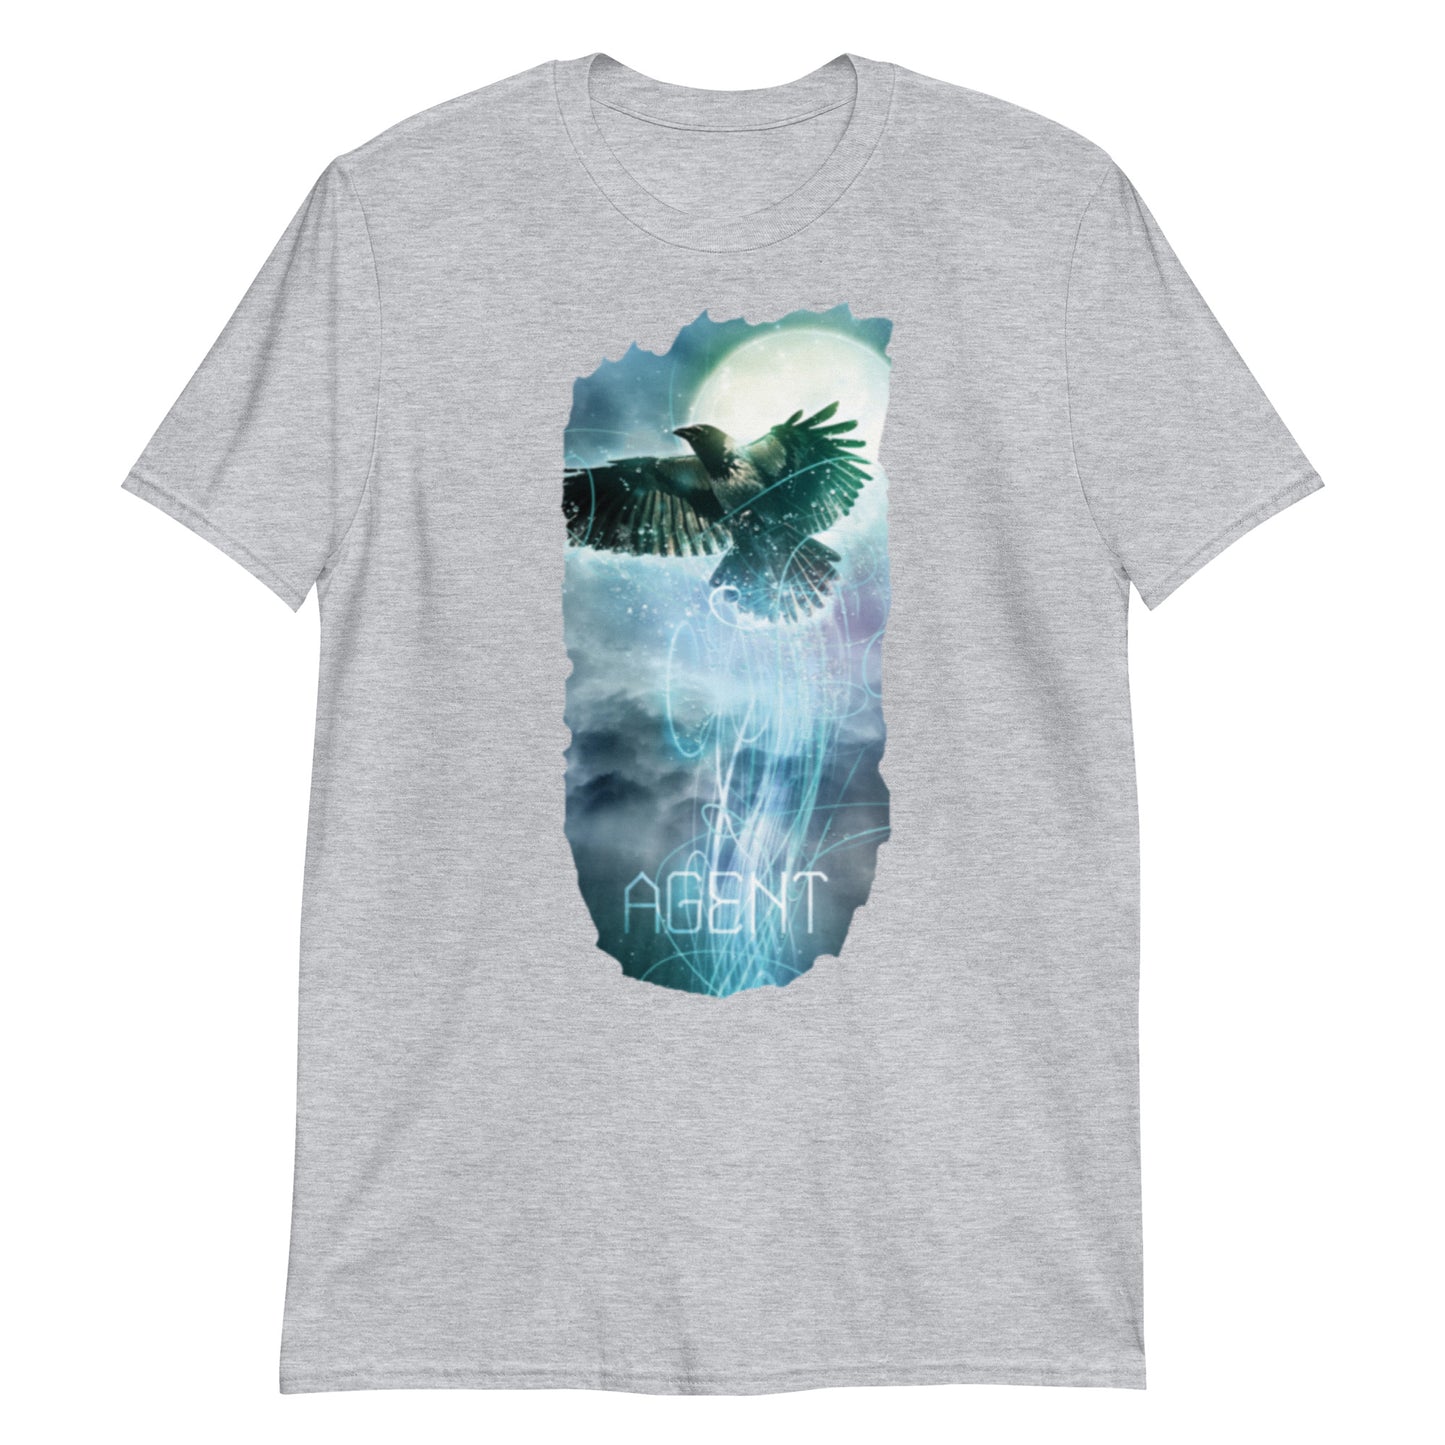 Agent Water Crow T-Shirt -Discount Tee